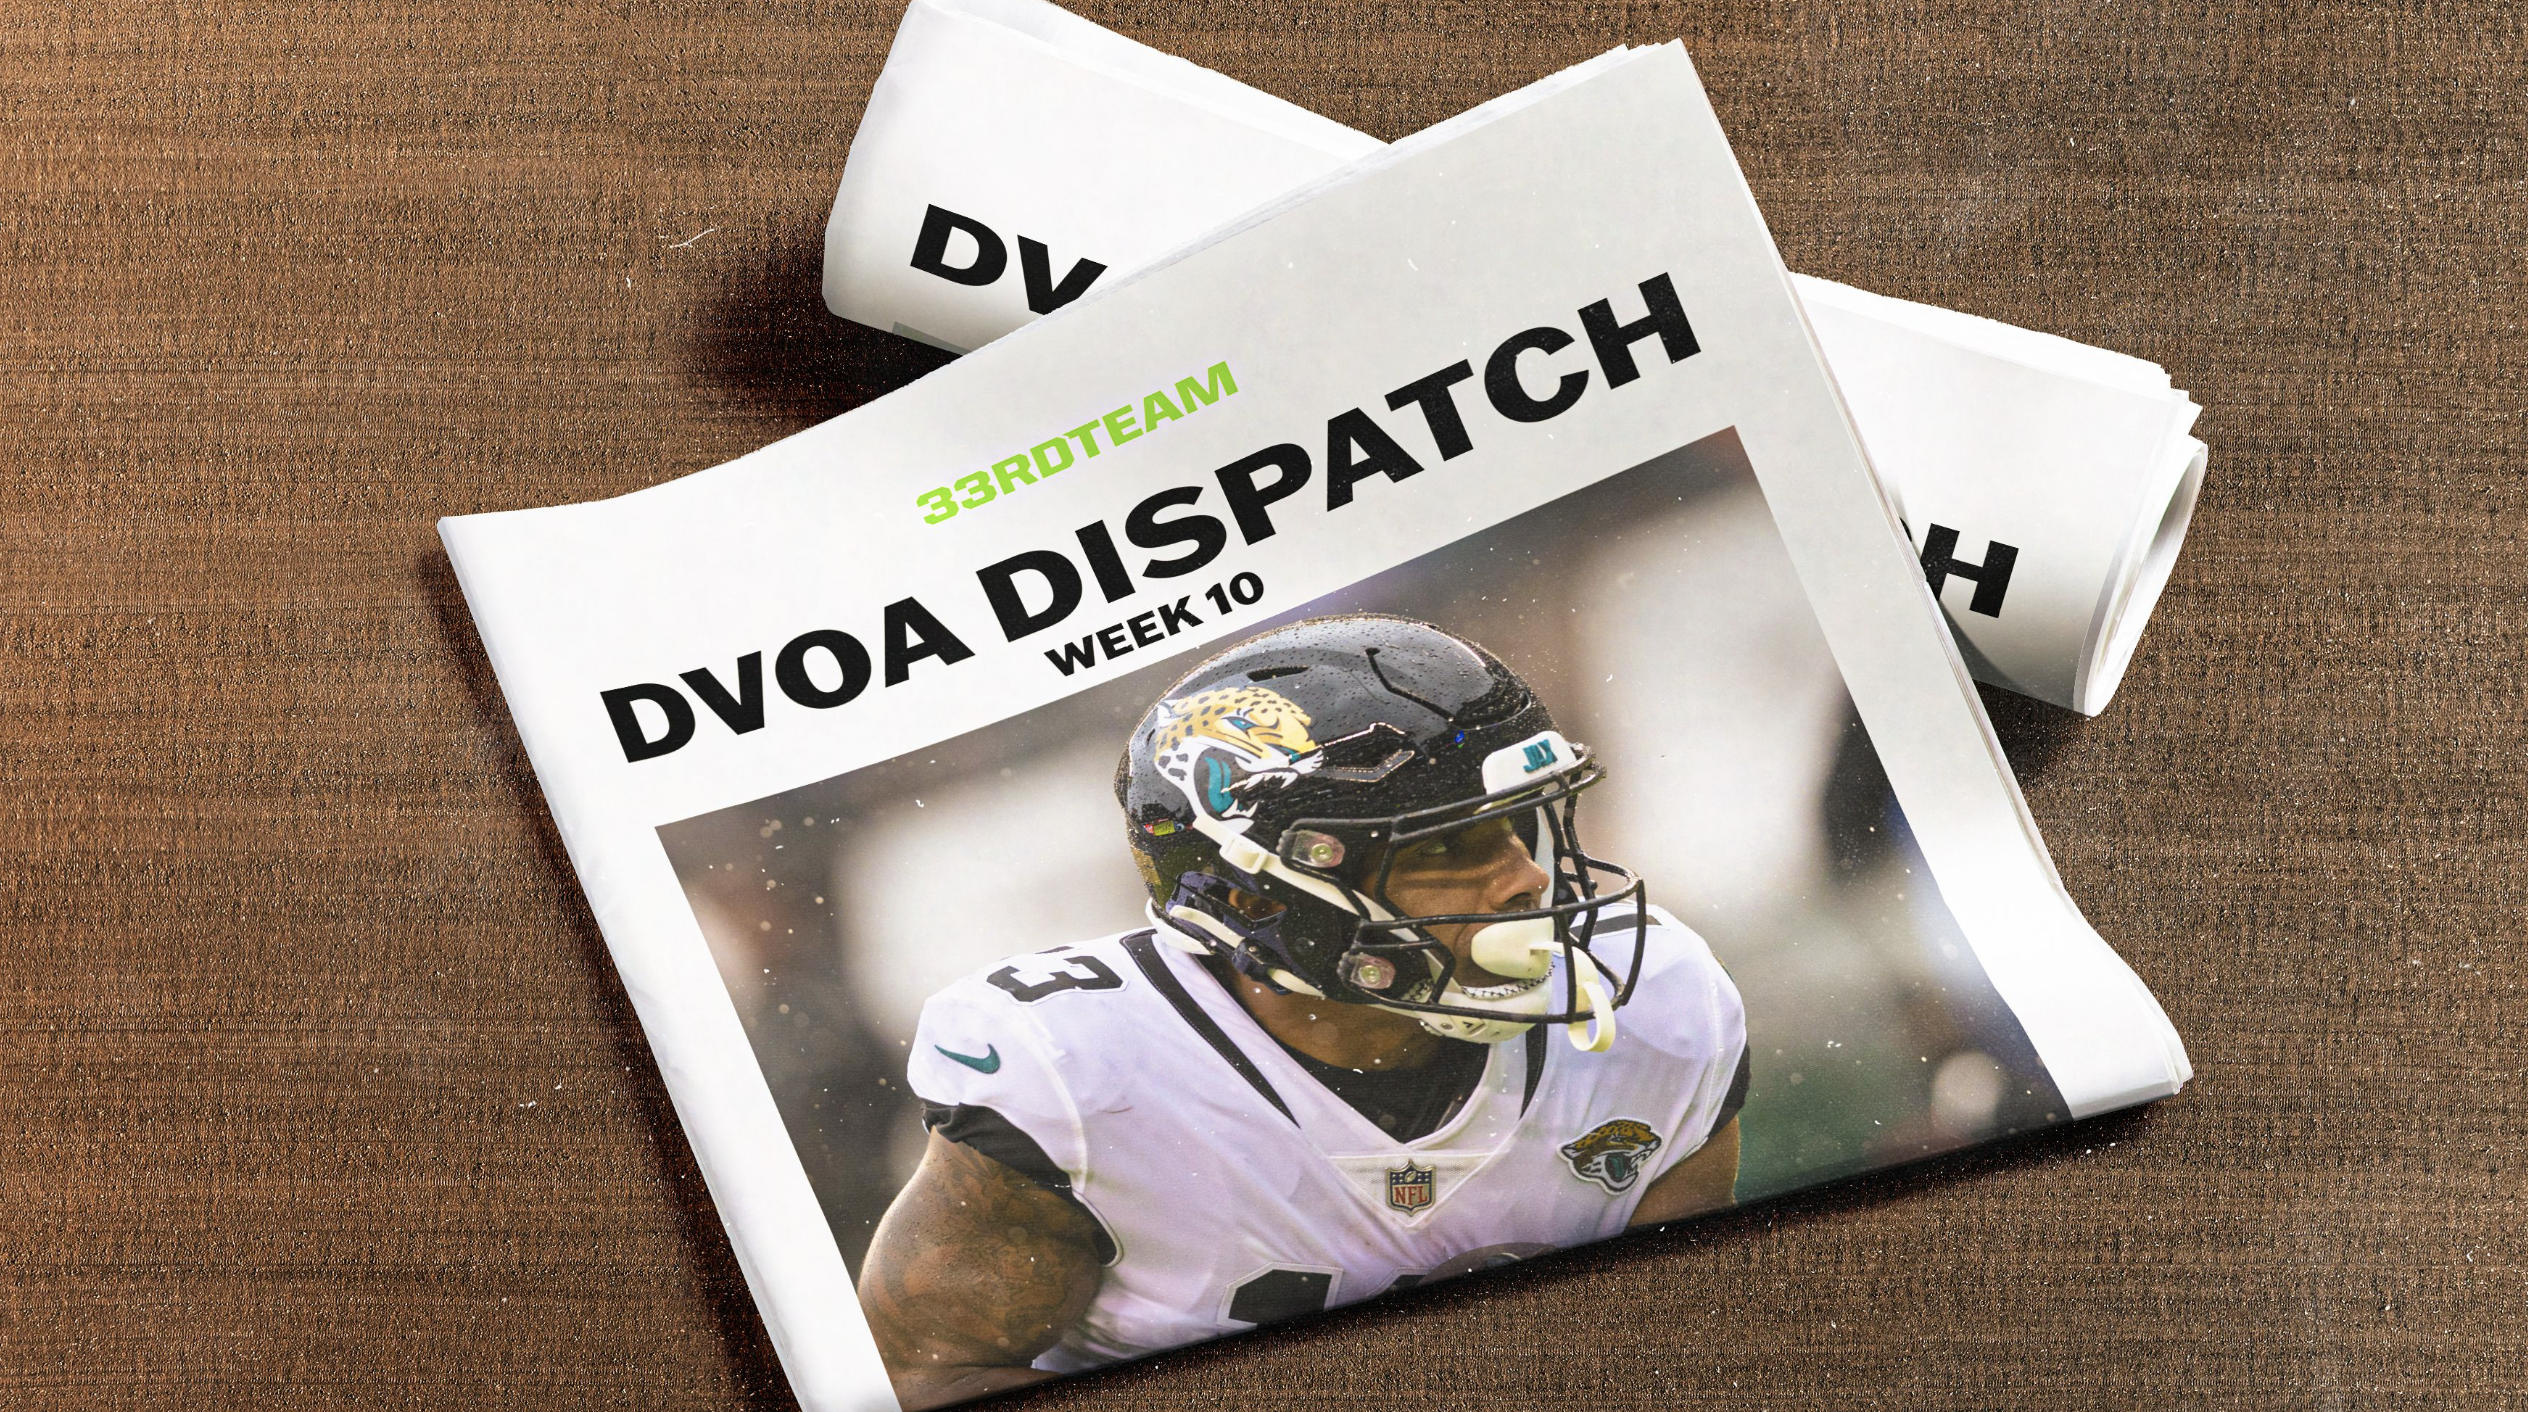 DVOA Dispatch: DFS Targets for Week 10